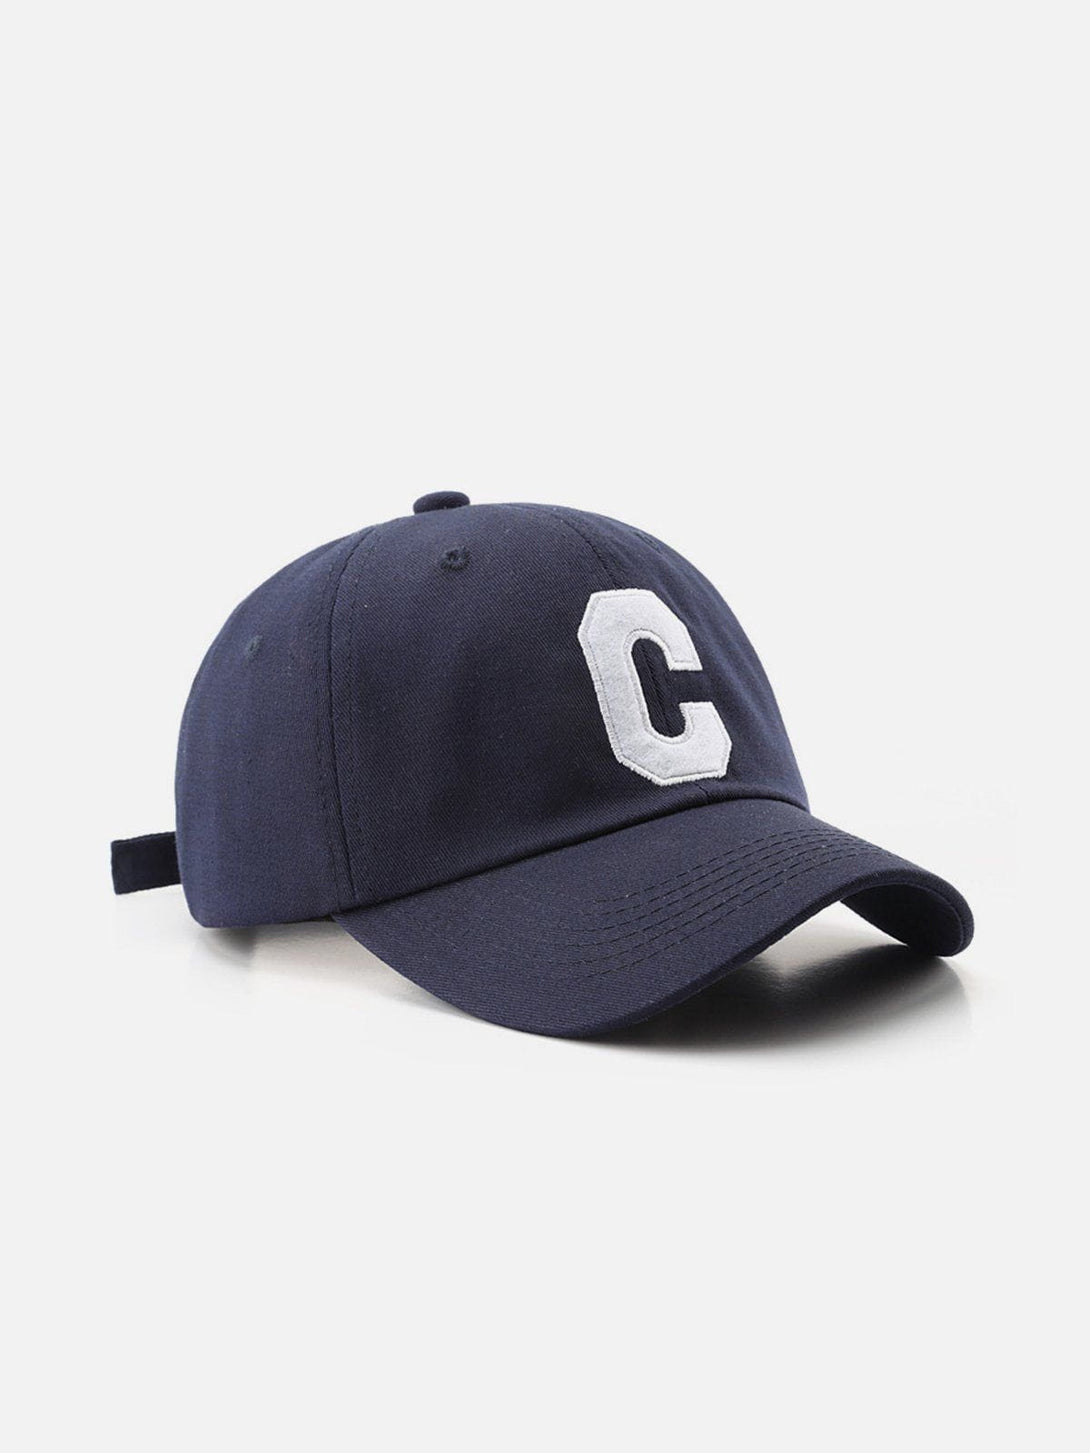 Majesda® - Vintage Letter "C" Baseball Cap- Outfit Ideas - Streetwear Fashion - majesda.com